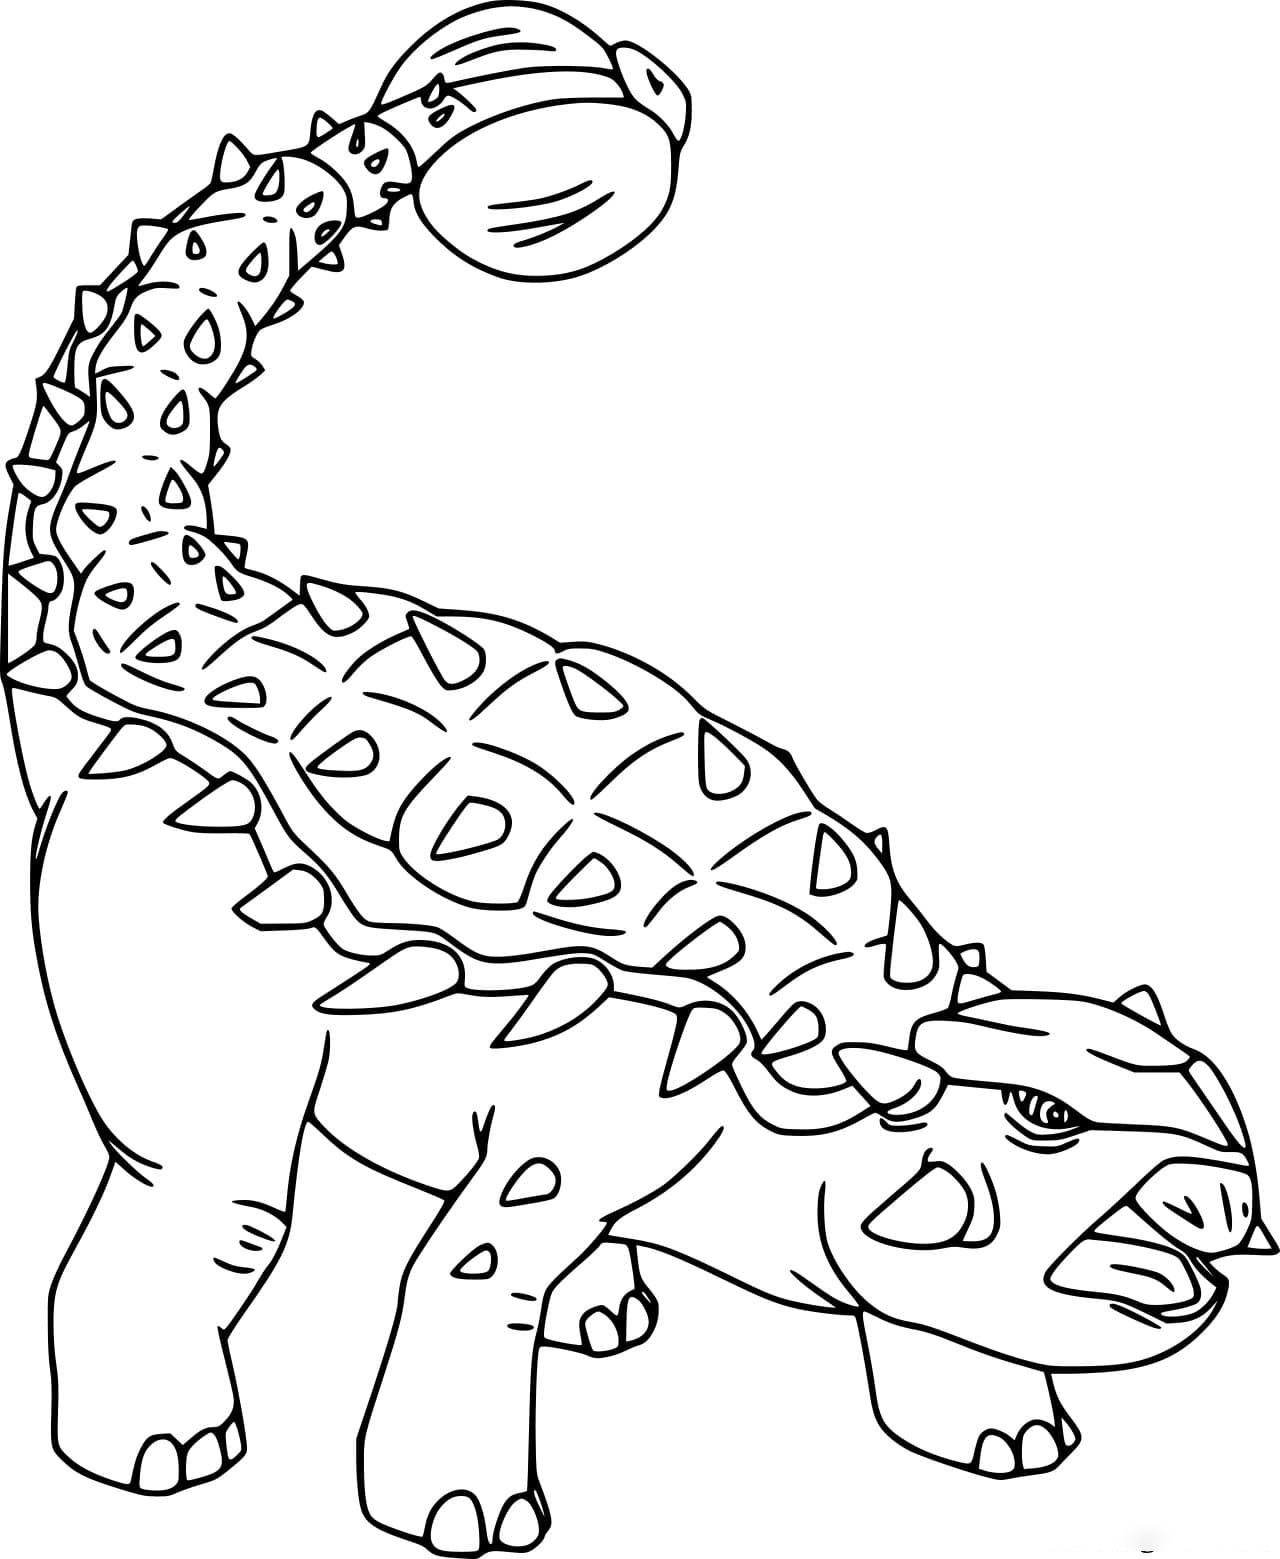 Coloriage dinosaure ankylosaure simple